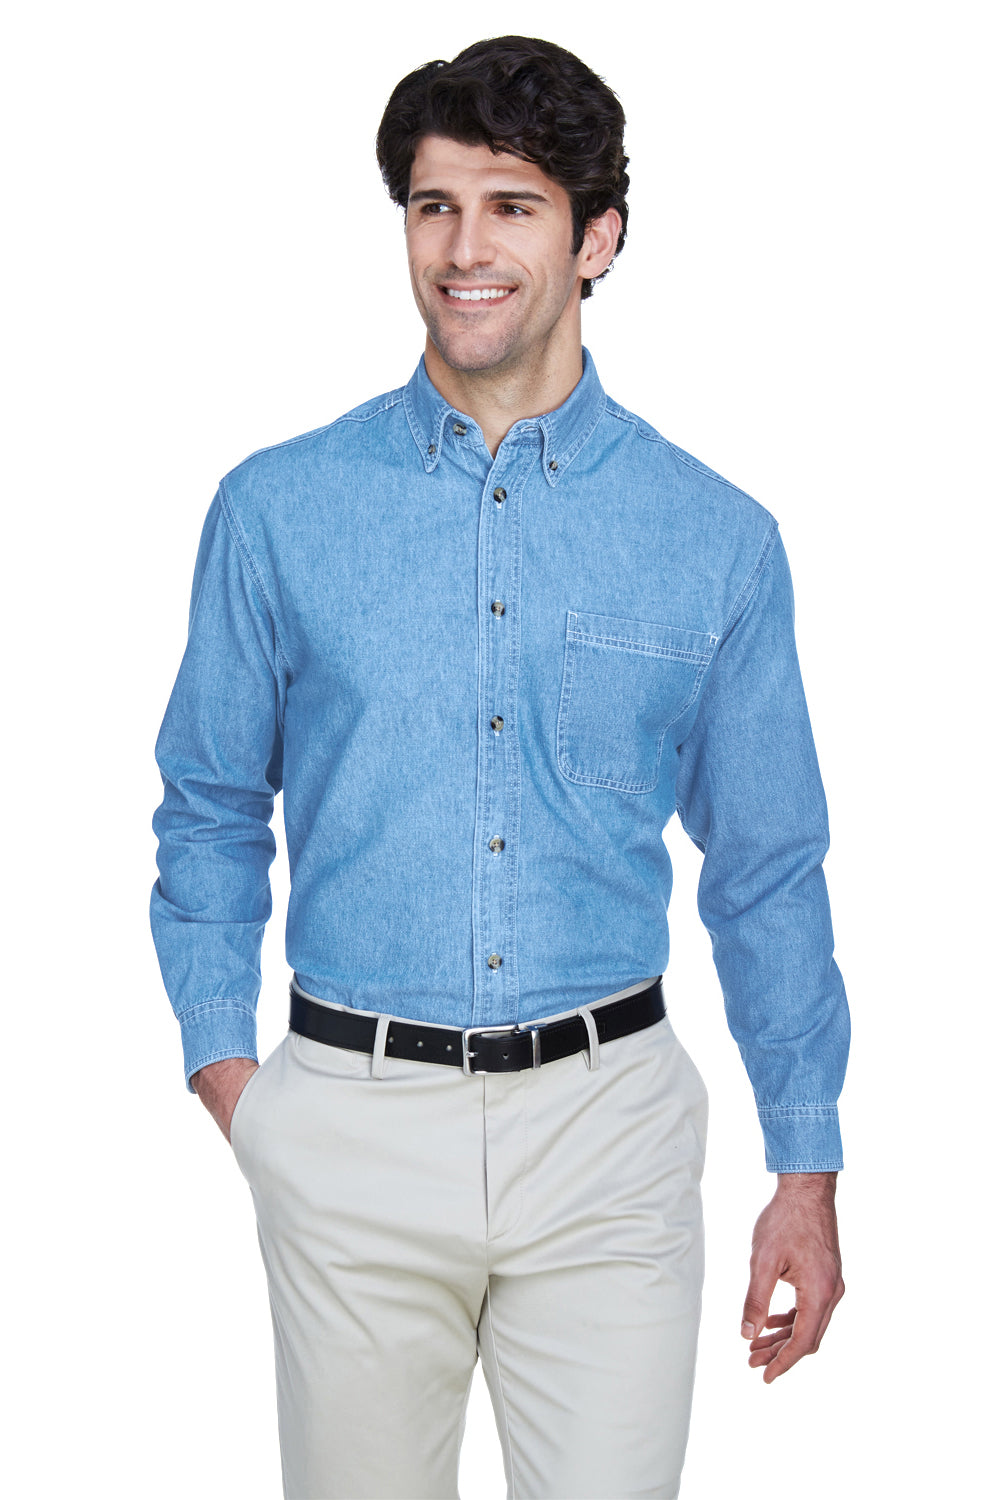 UltraClub 8960 Mens Cypress Denim Long Sleeve Button Down Shirt w/ Pocket Light Blue Front